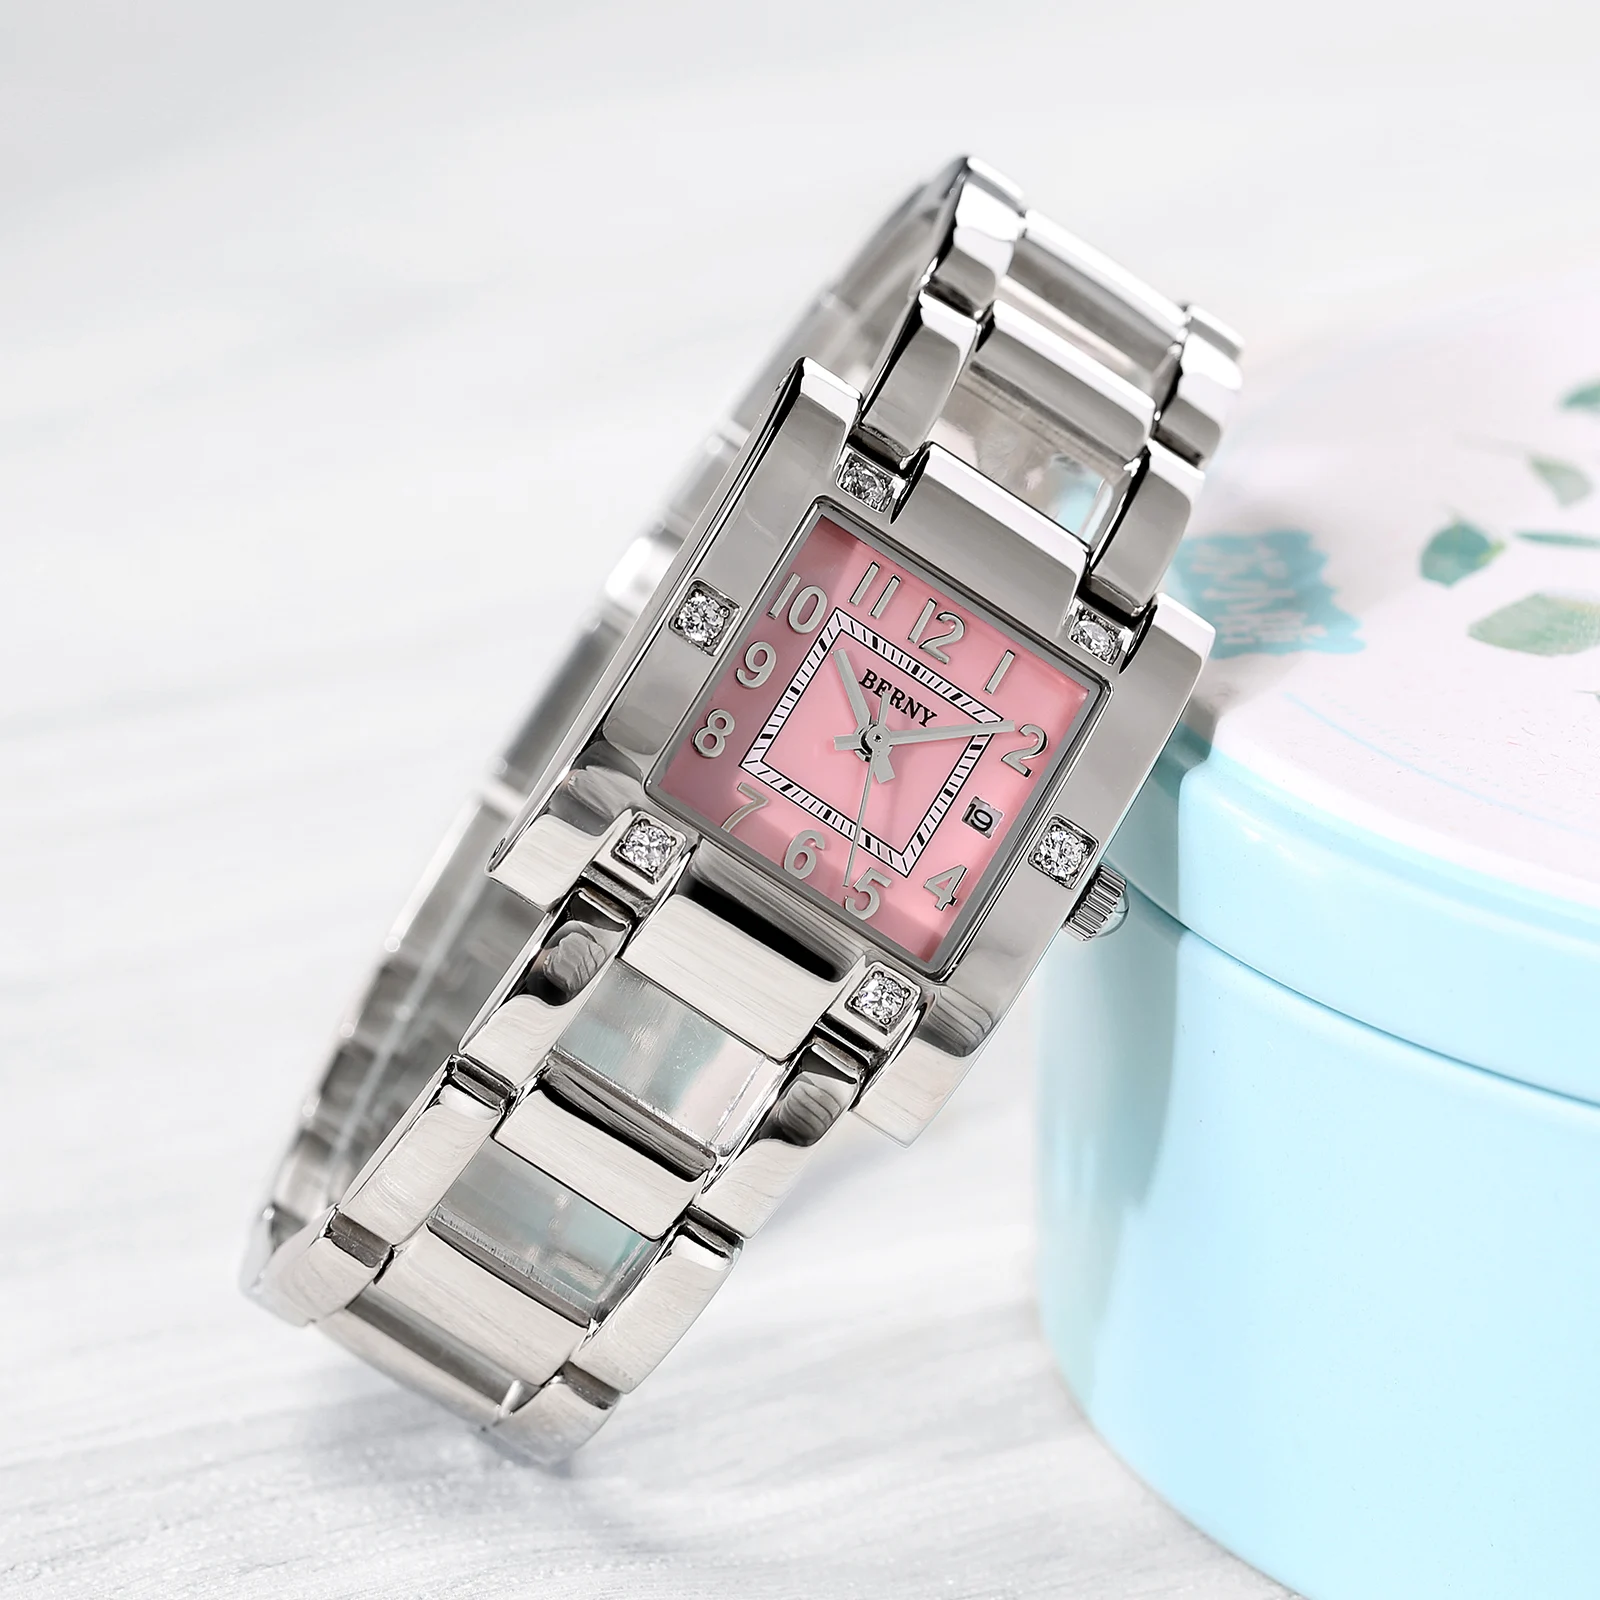 BERNY Quartz Watch for Women Fashion & Casual Easy Read Stainless Steel Ladies Clock 3ATM Waterproof Wristwatch Relogio Feminino enlarge